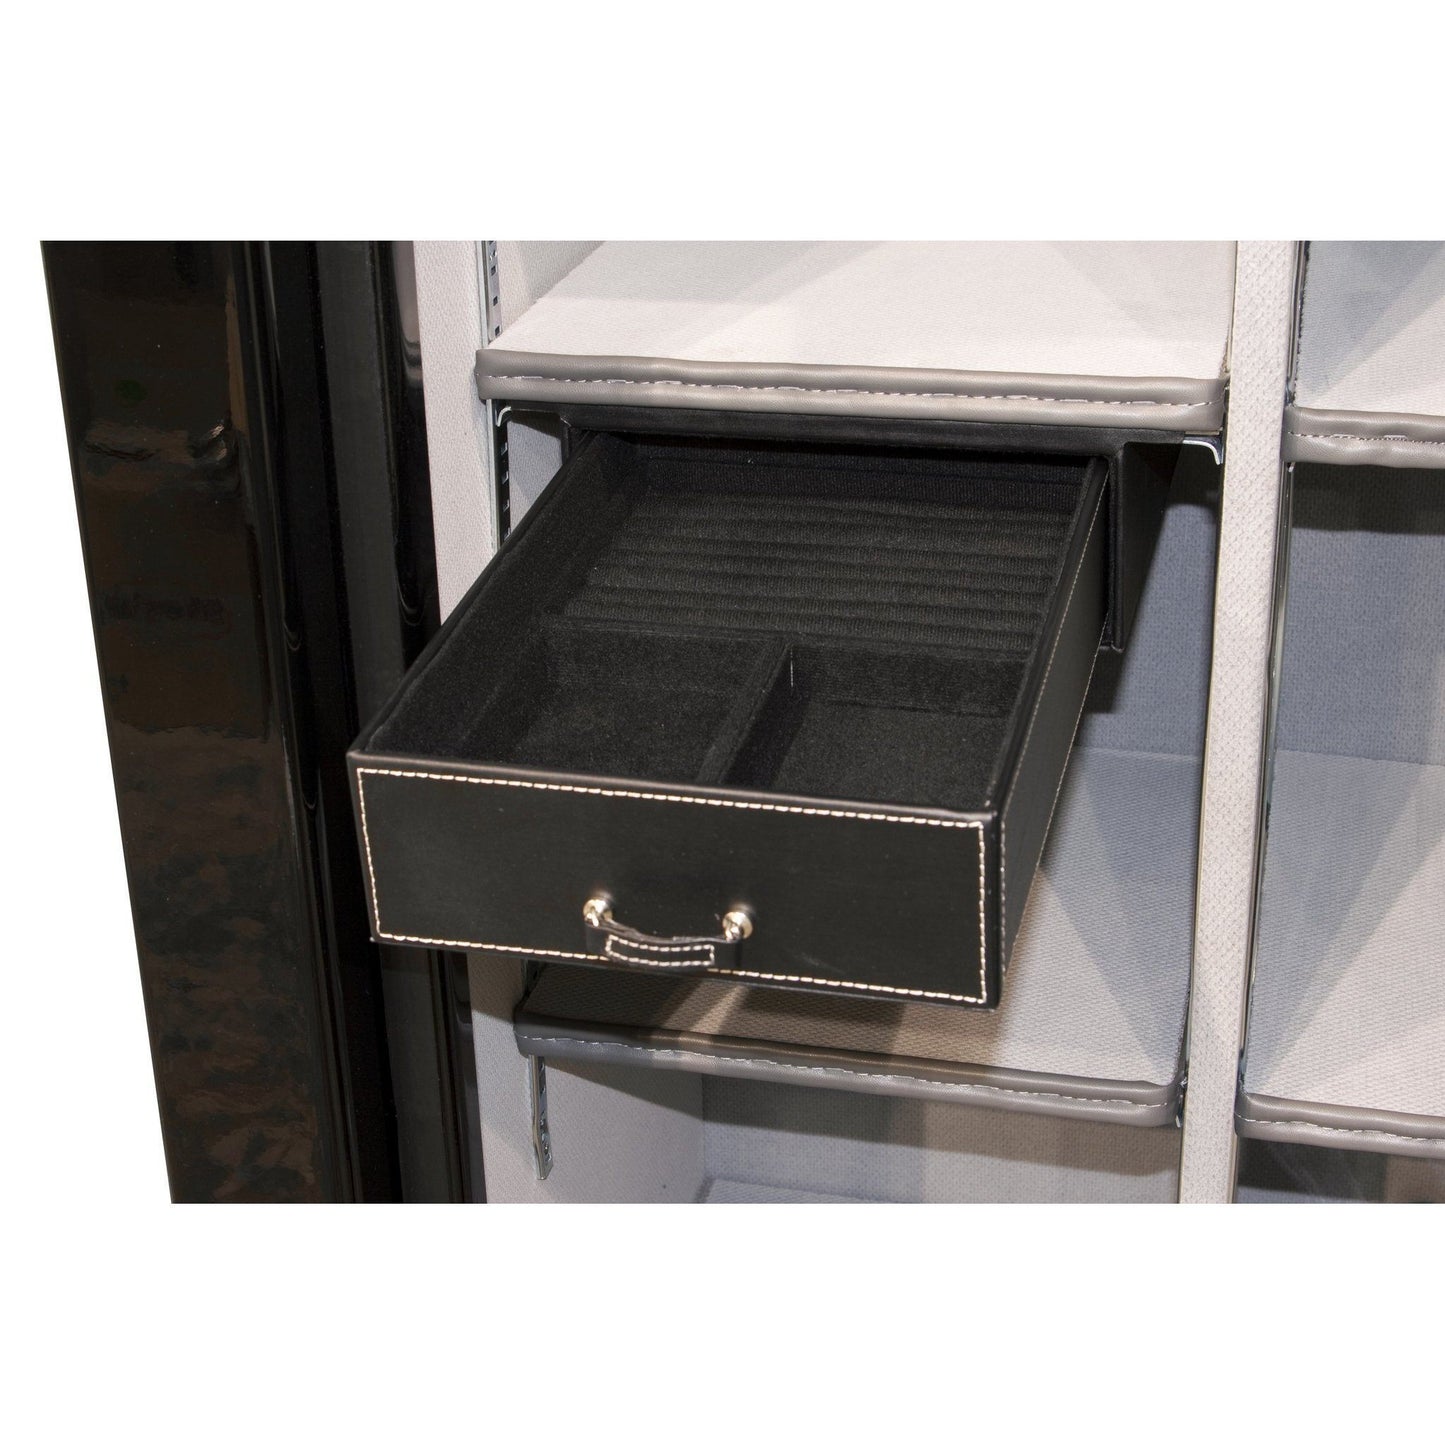 Accessory - Storage - Jewelry Drawer - 8.5 inch - under shelf mount - 23-50 size safes